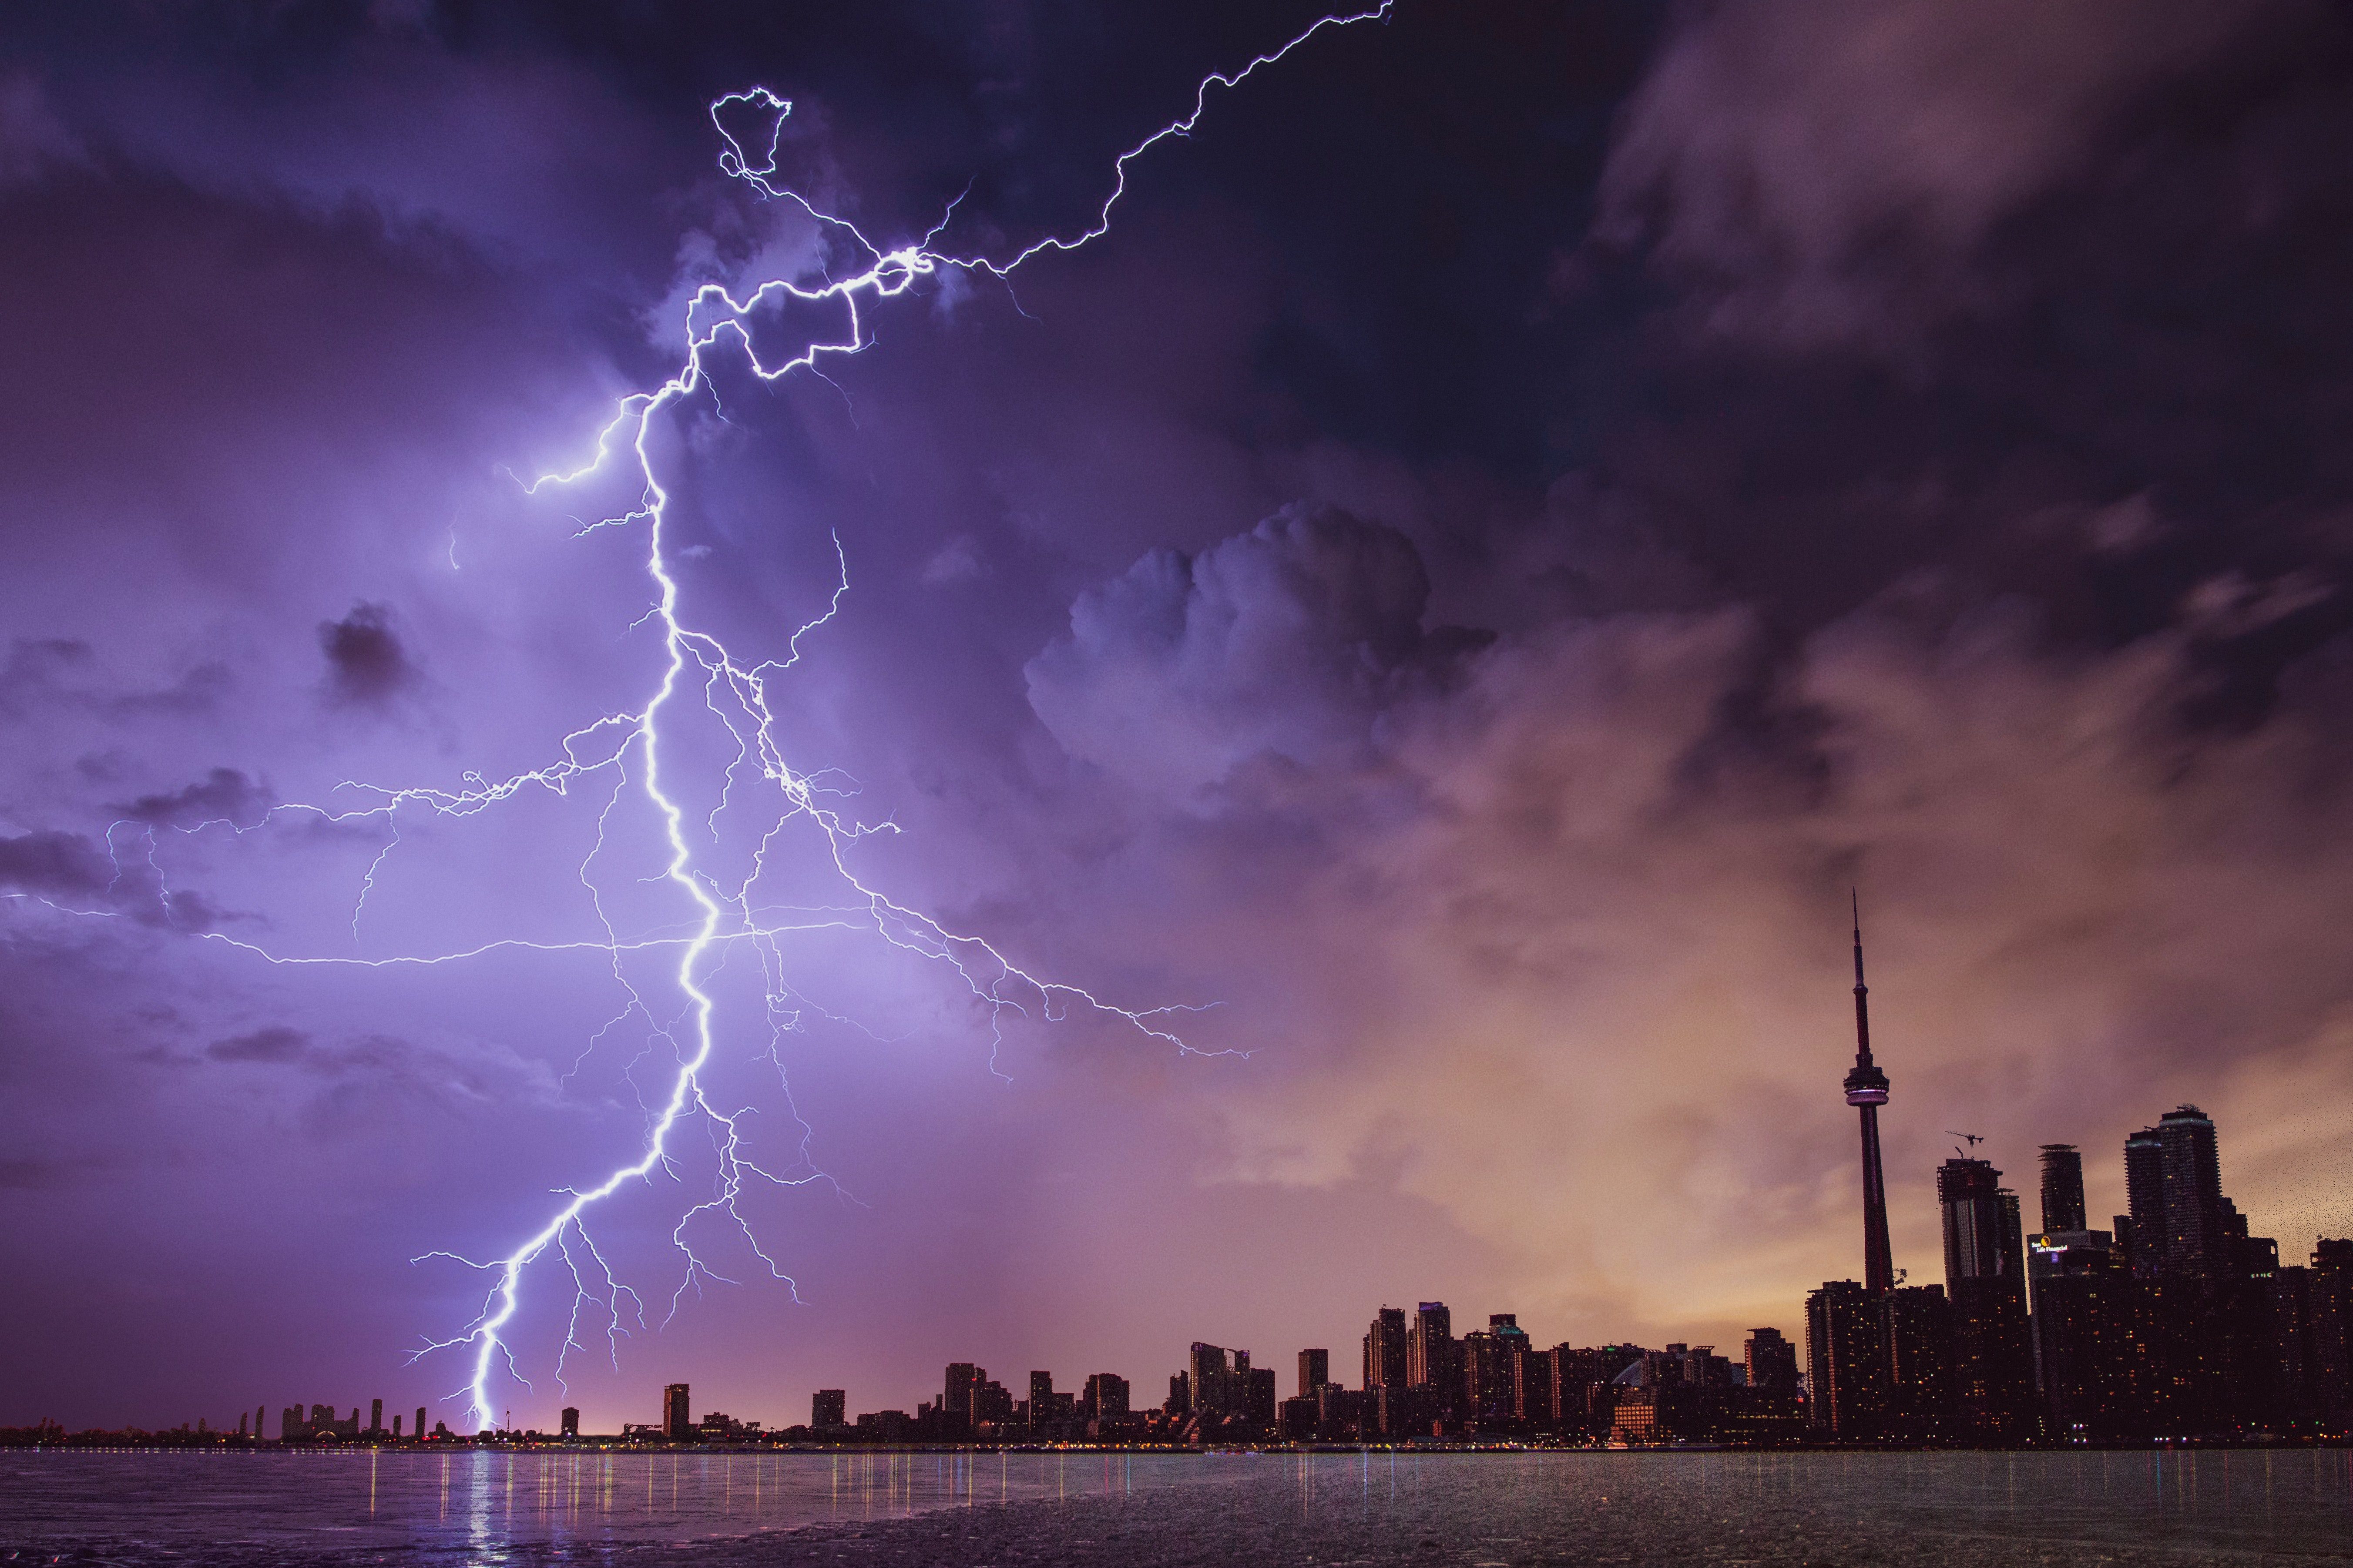 lightning striking a city